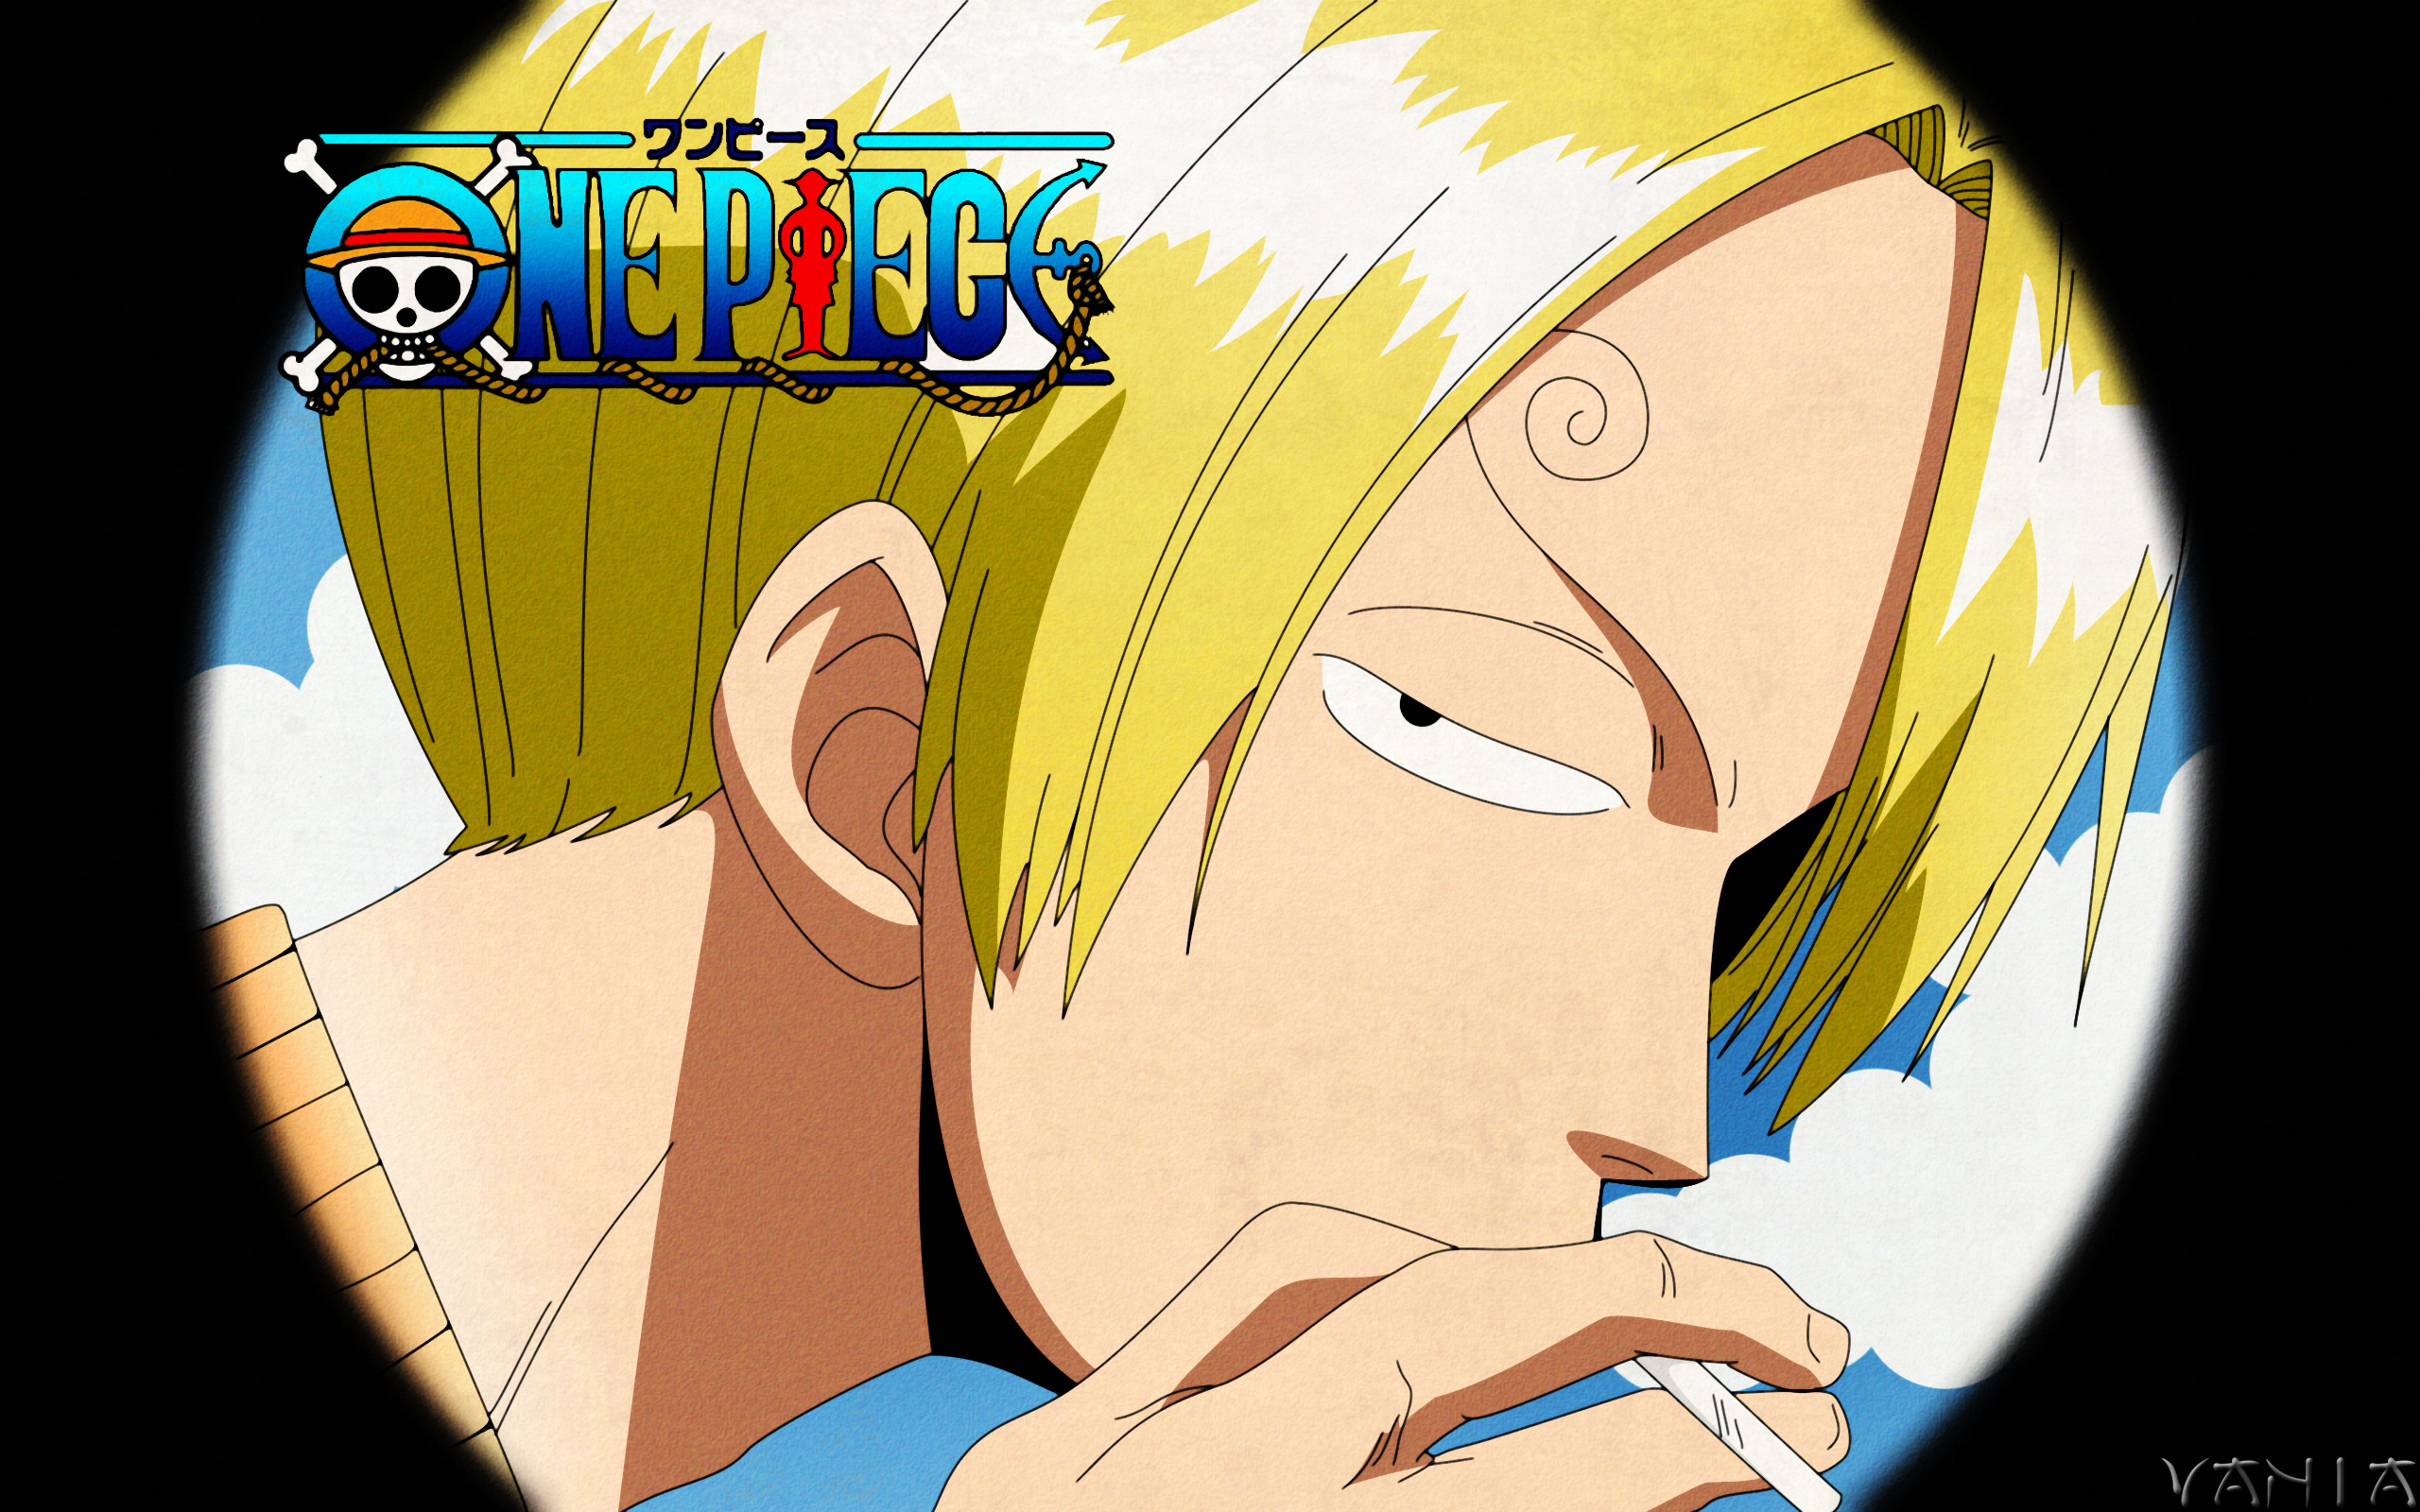 Free Download One Piece Sanjo Smoker  HD Wallpaper Picture Image